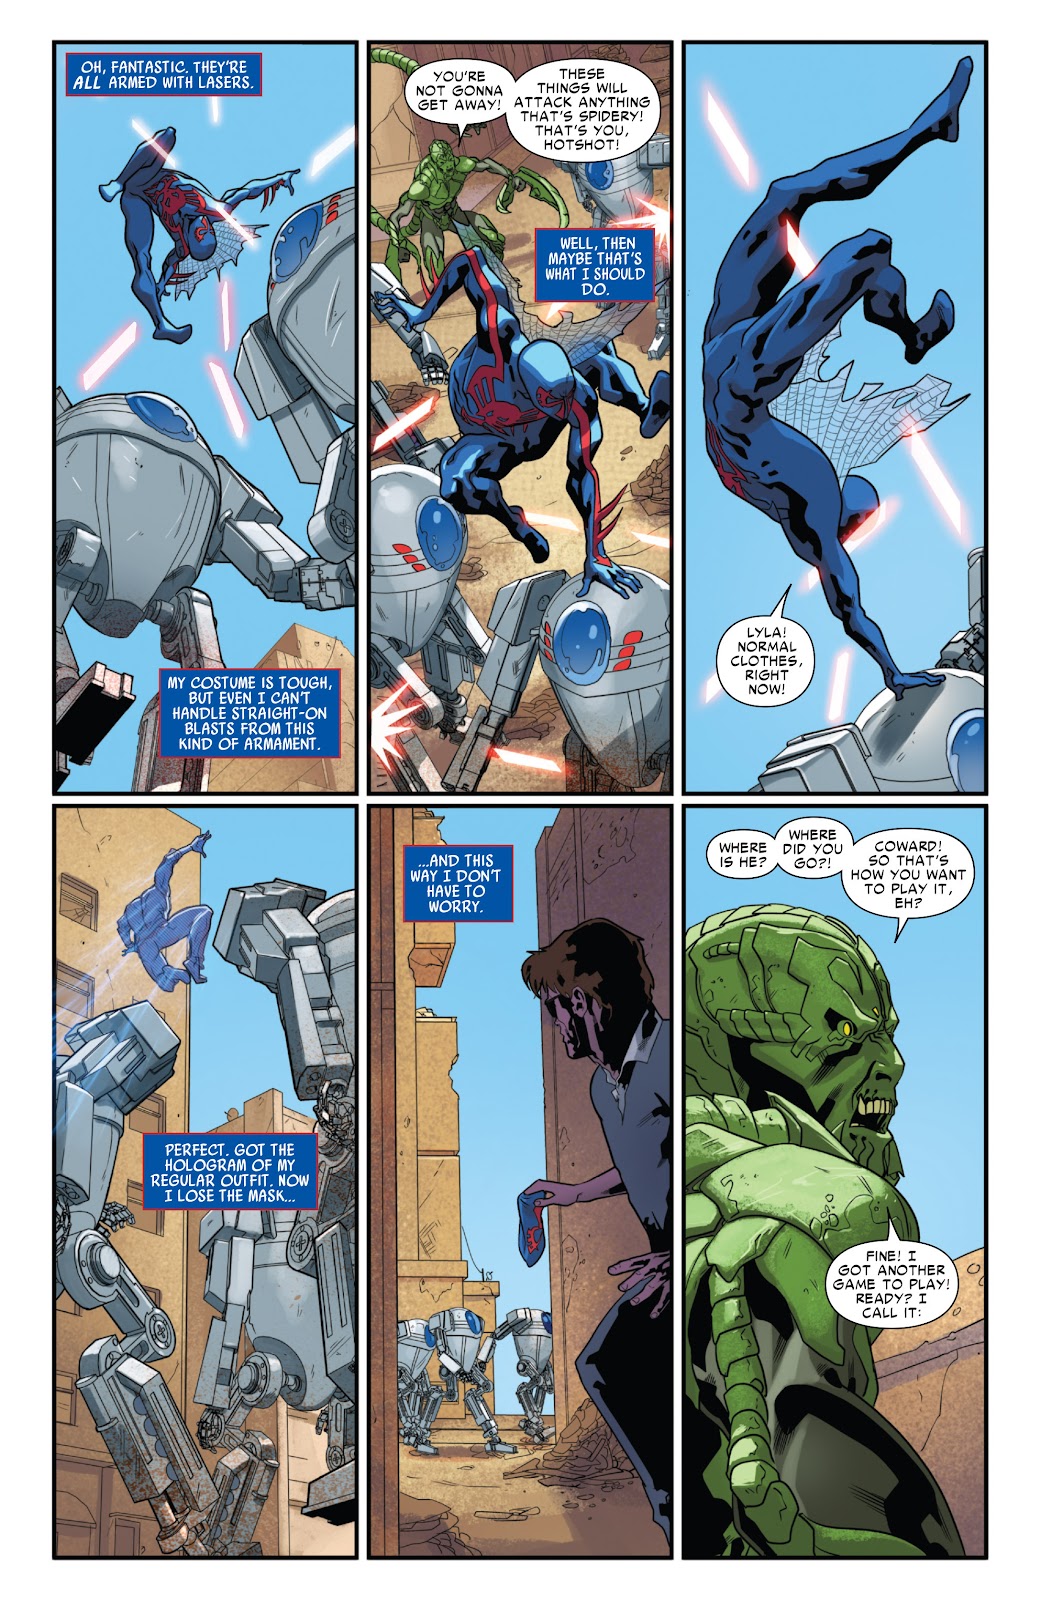 Spider-Man 2099 (2014) issue 4 - Page 11